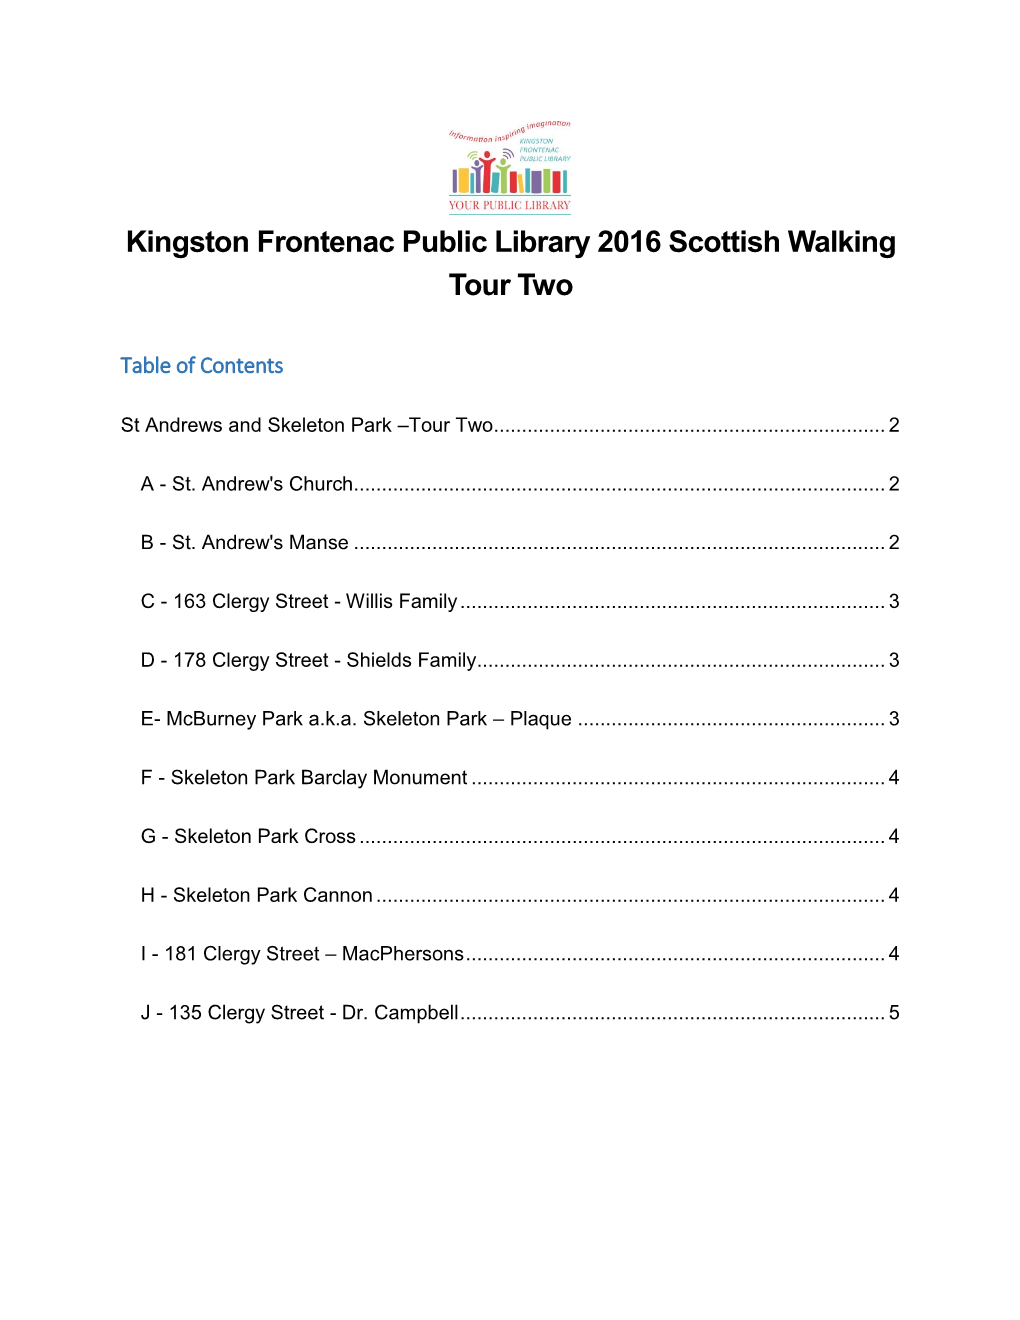 Kingston Frontenac Public Library 2016 Scottish Walking Tour Two